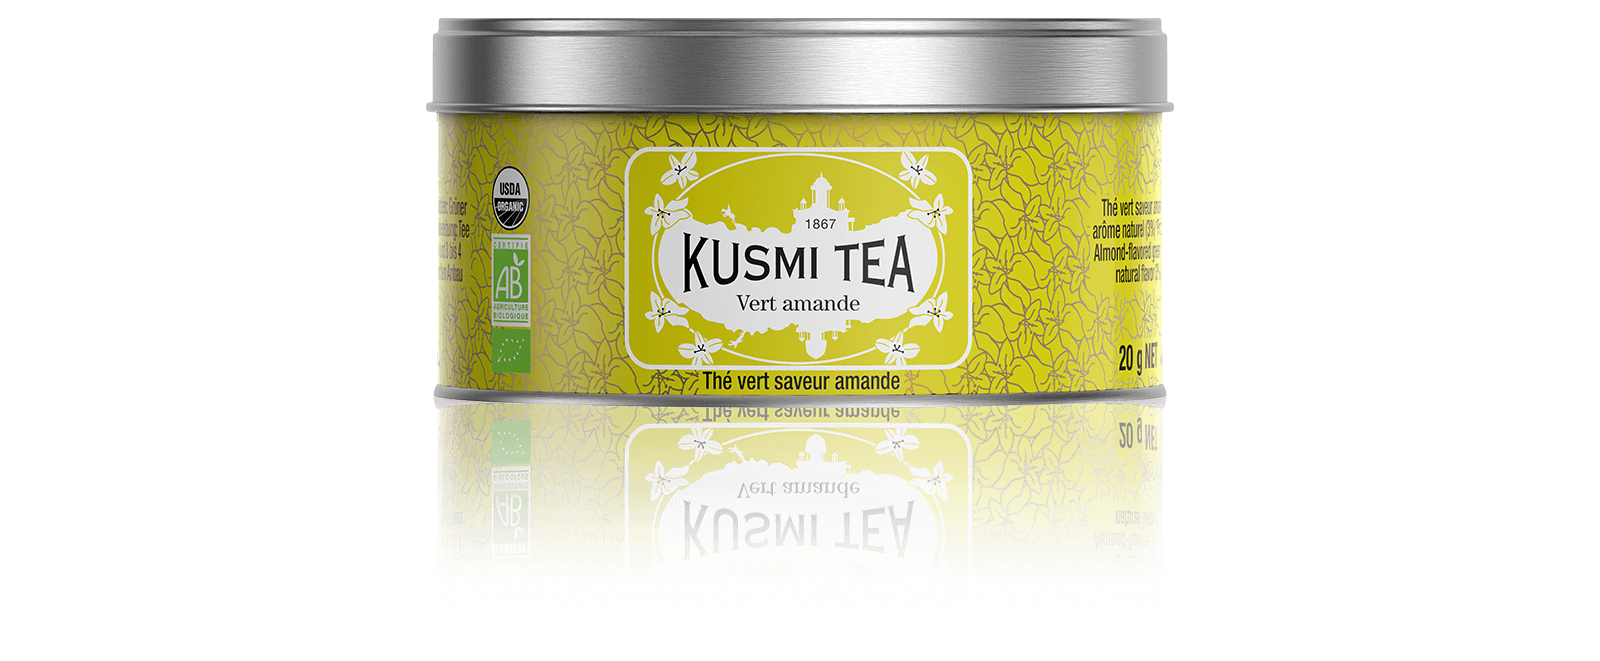 Thé vert à l'amande - Boite 20g de Thé Bio - Vert Amande bio - Kusmi Tea